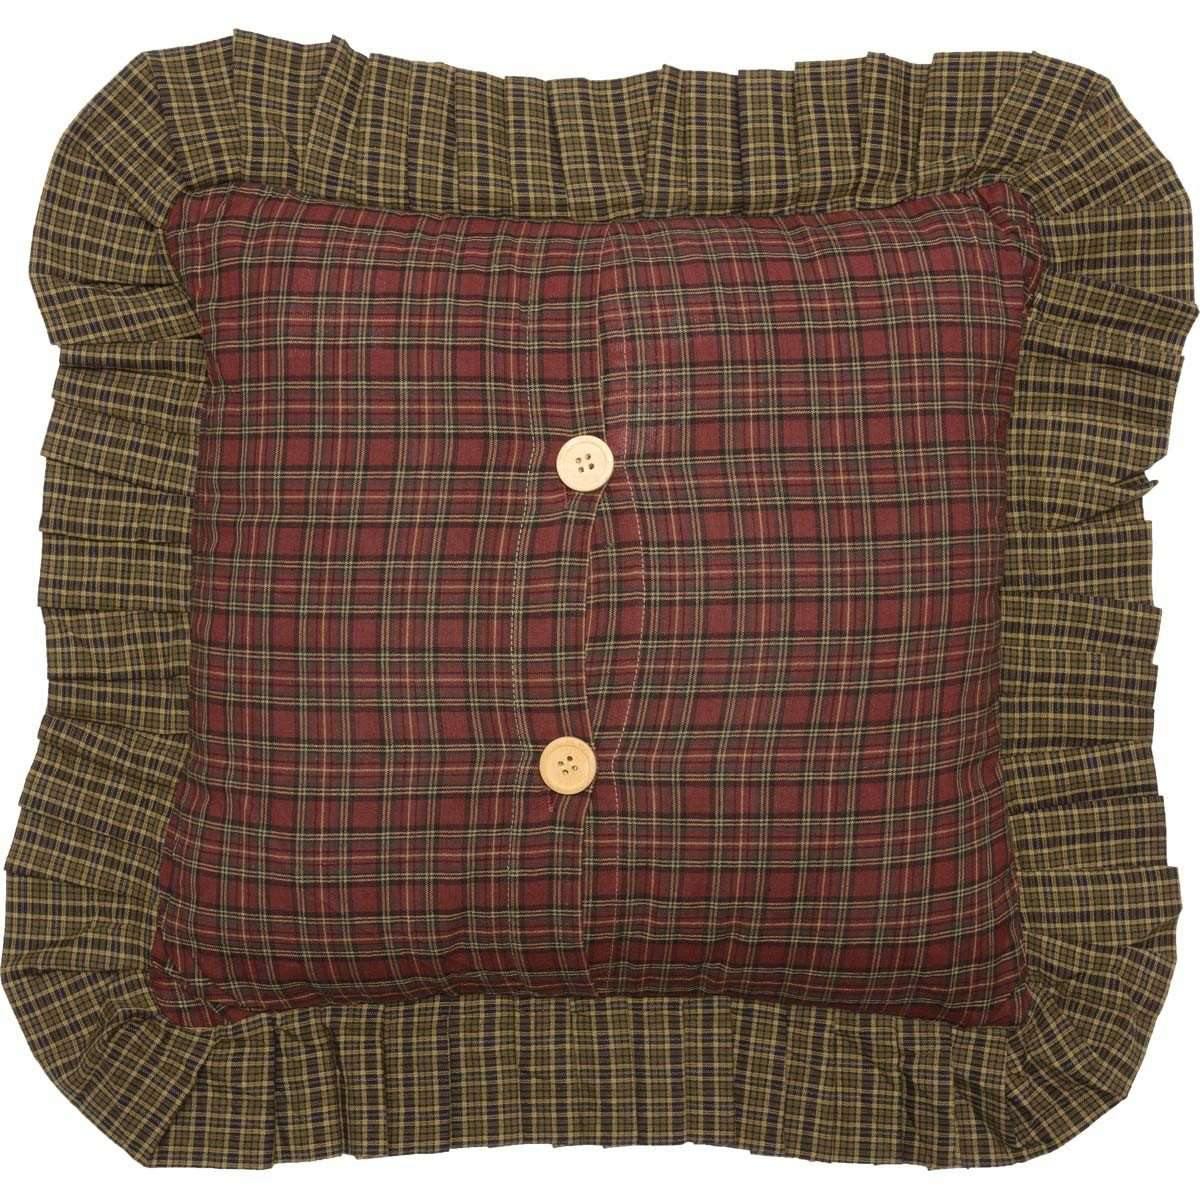 Tea Cabin Fabric Ruffled Pillow 16x16 VHC Brands back